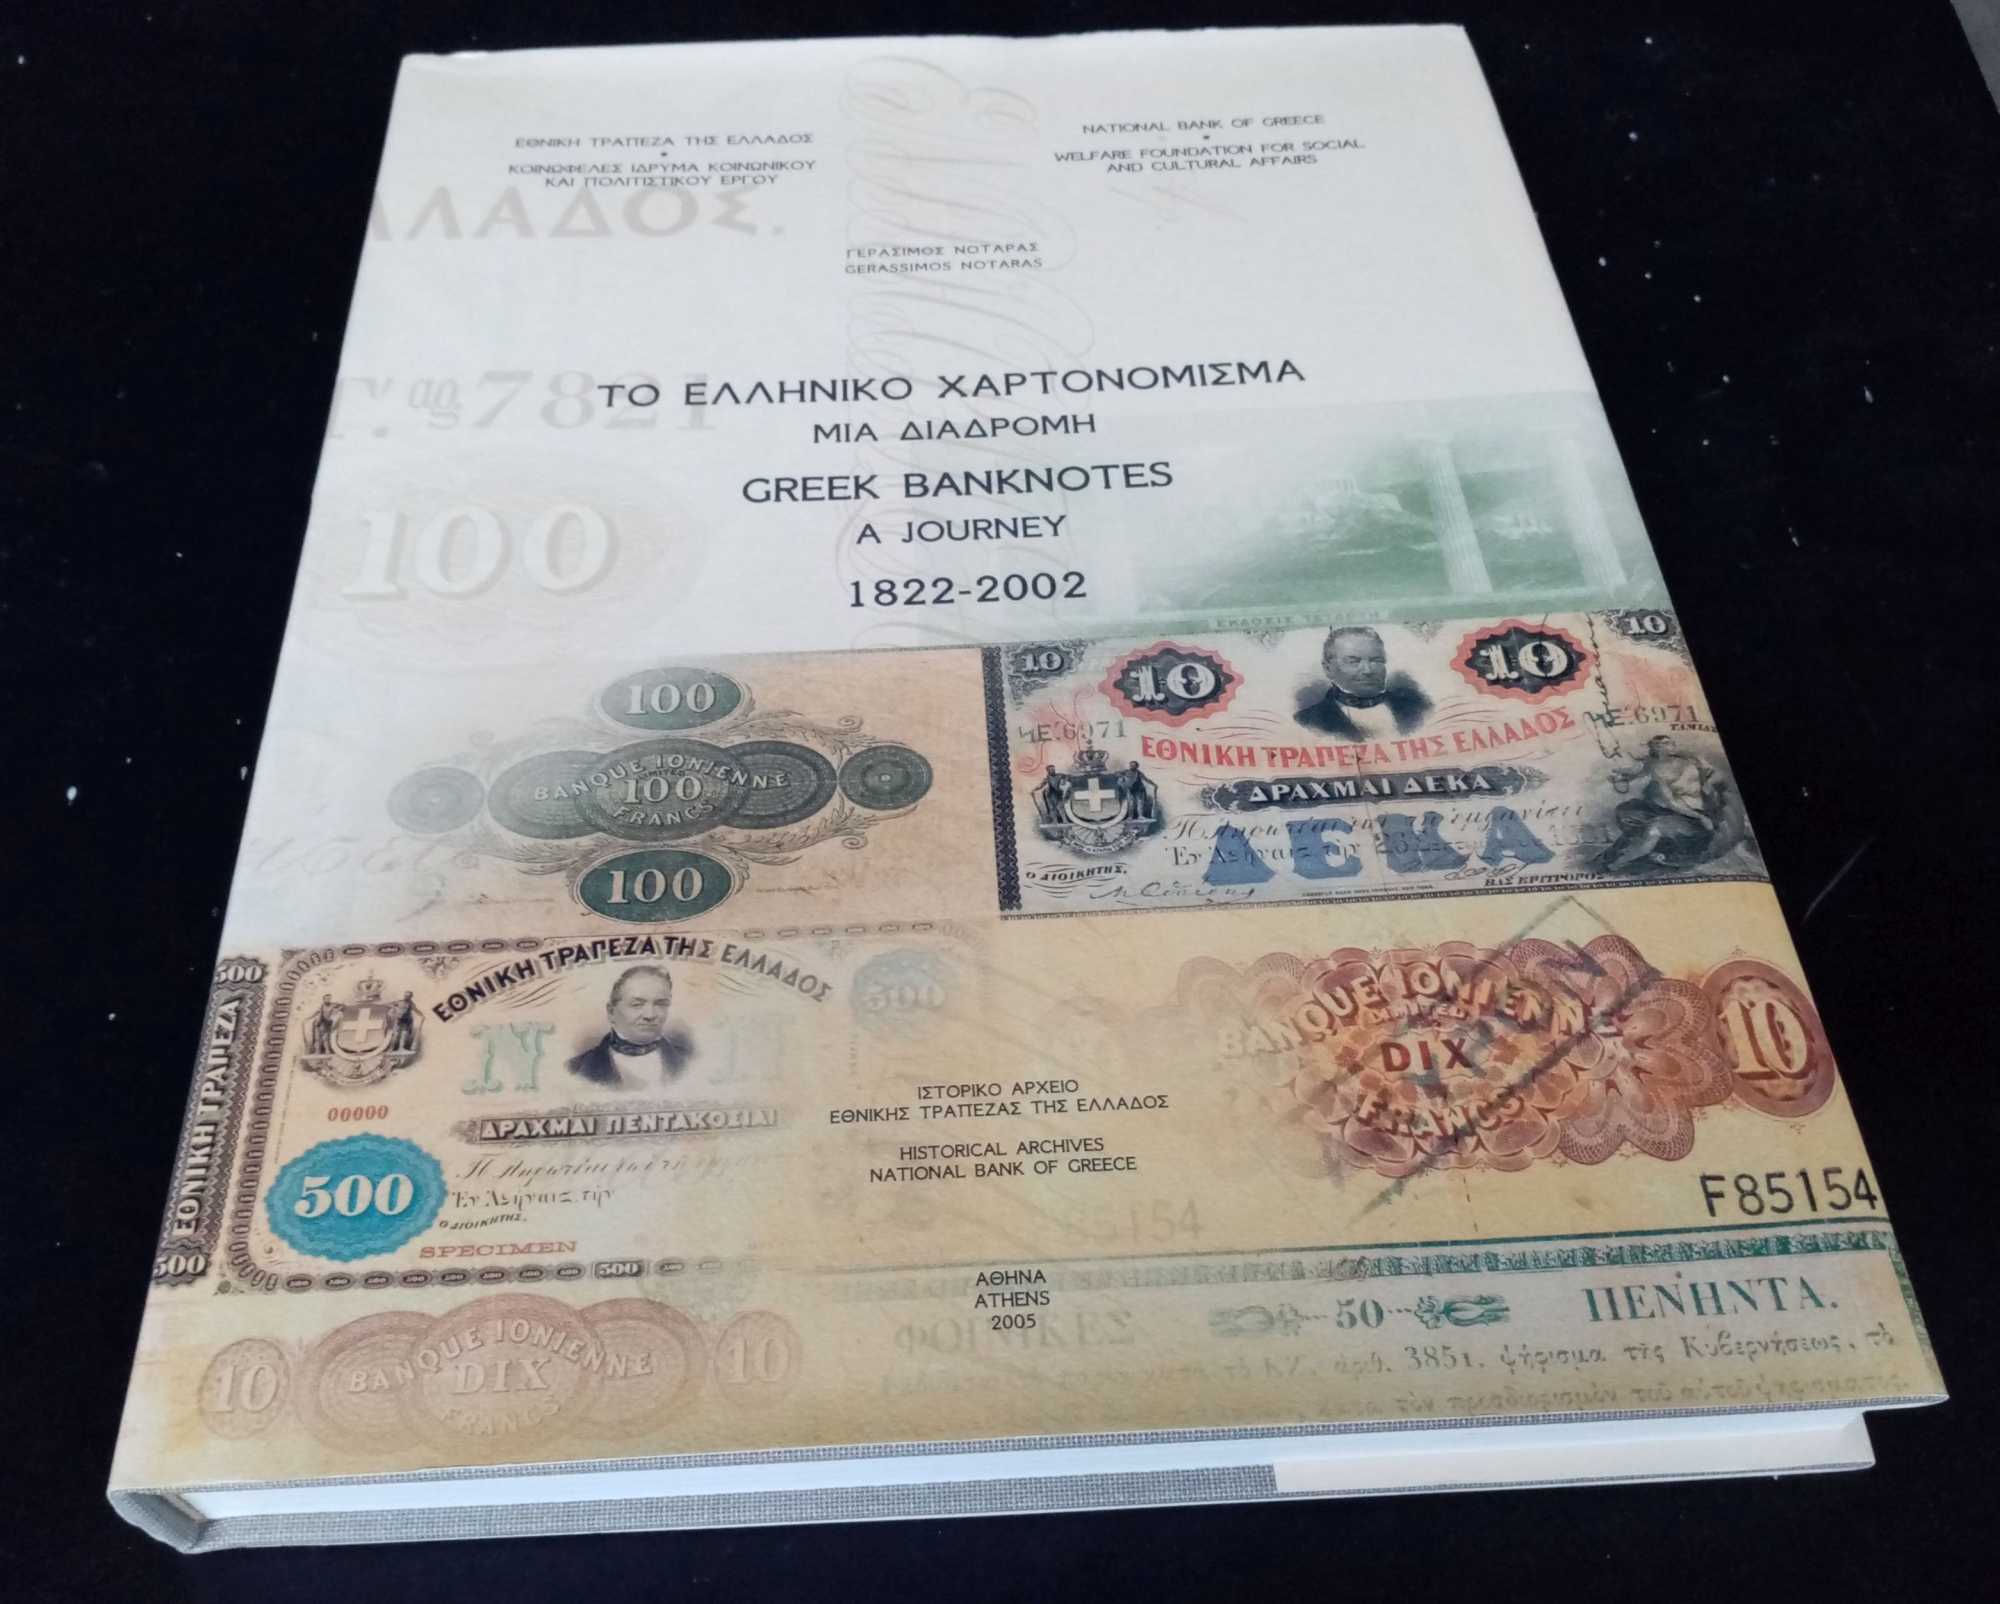 Notaras, Gerassimos - GREEK BANKNOTES: A JOURNEY 1822-2002